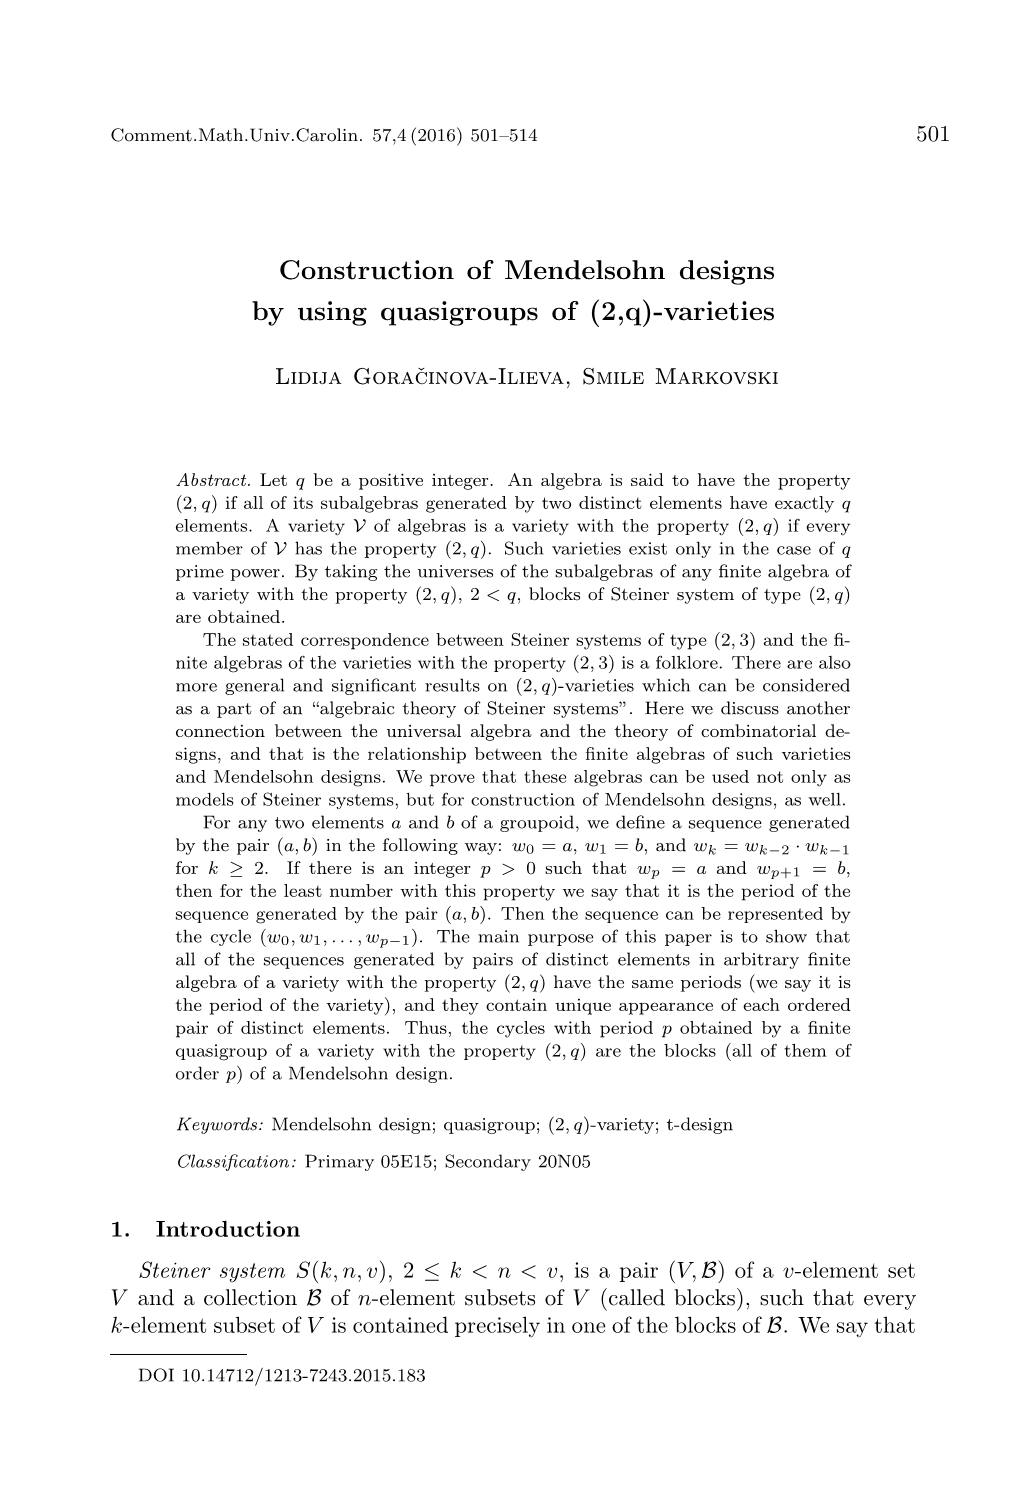 Construction of Mendelsohn Designs by Using Quasigroups of (2,Q)-Varieties